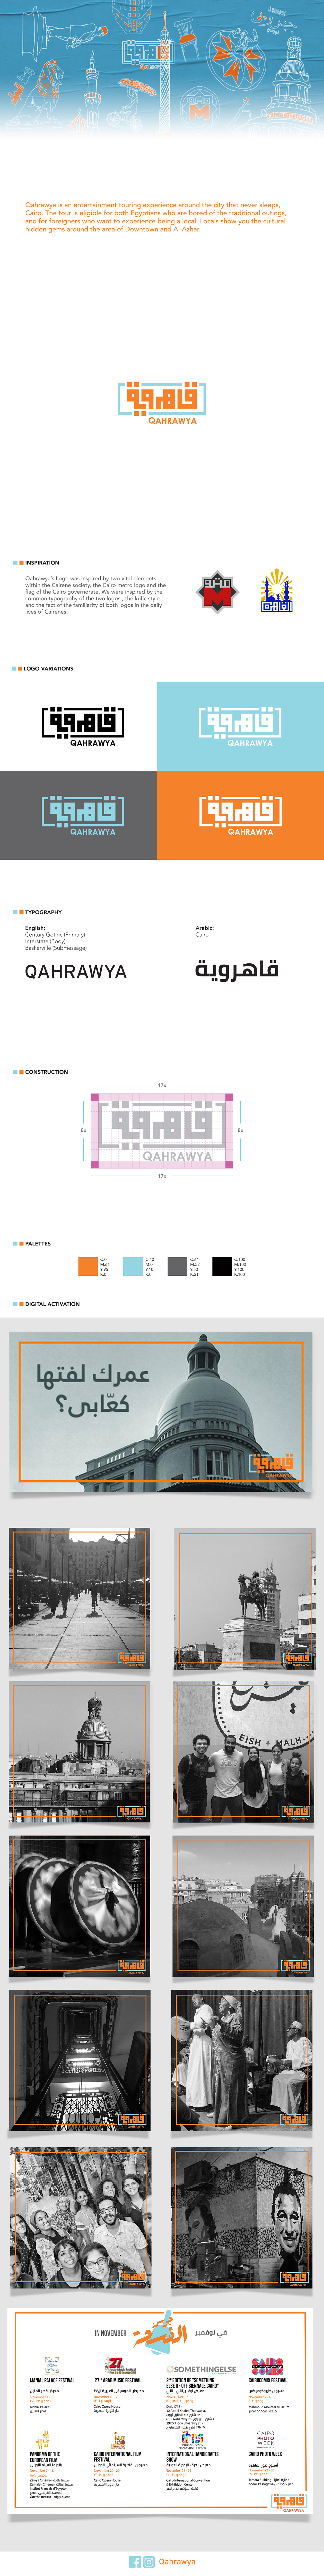 cairo graphic design  brand identity kufic culture tourism tour art egypt القاهرة